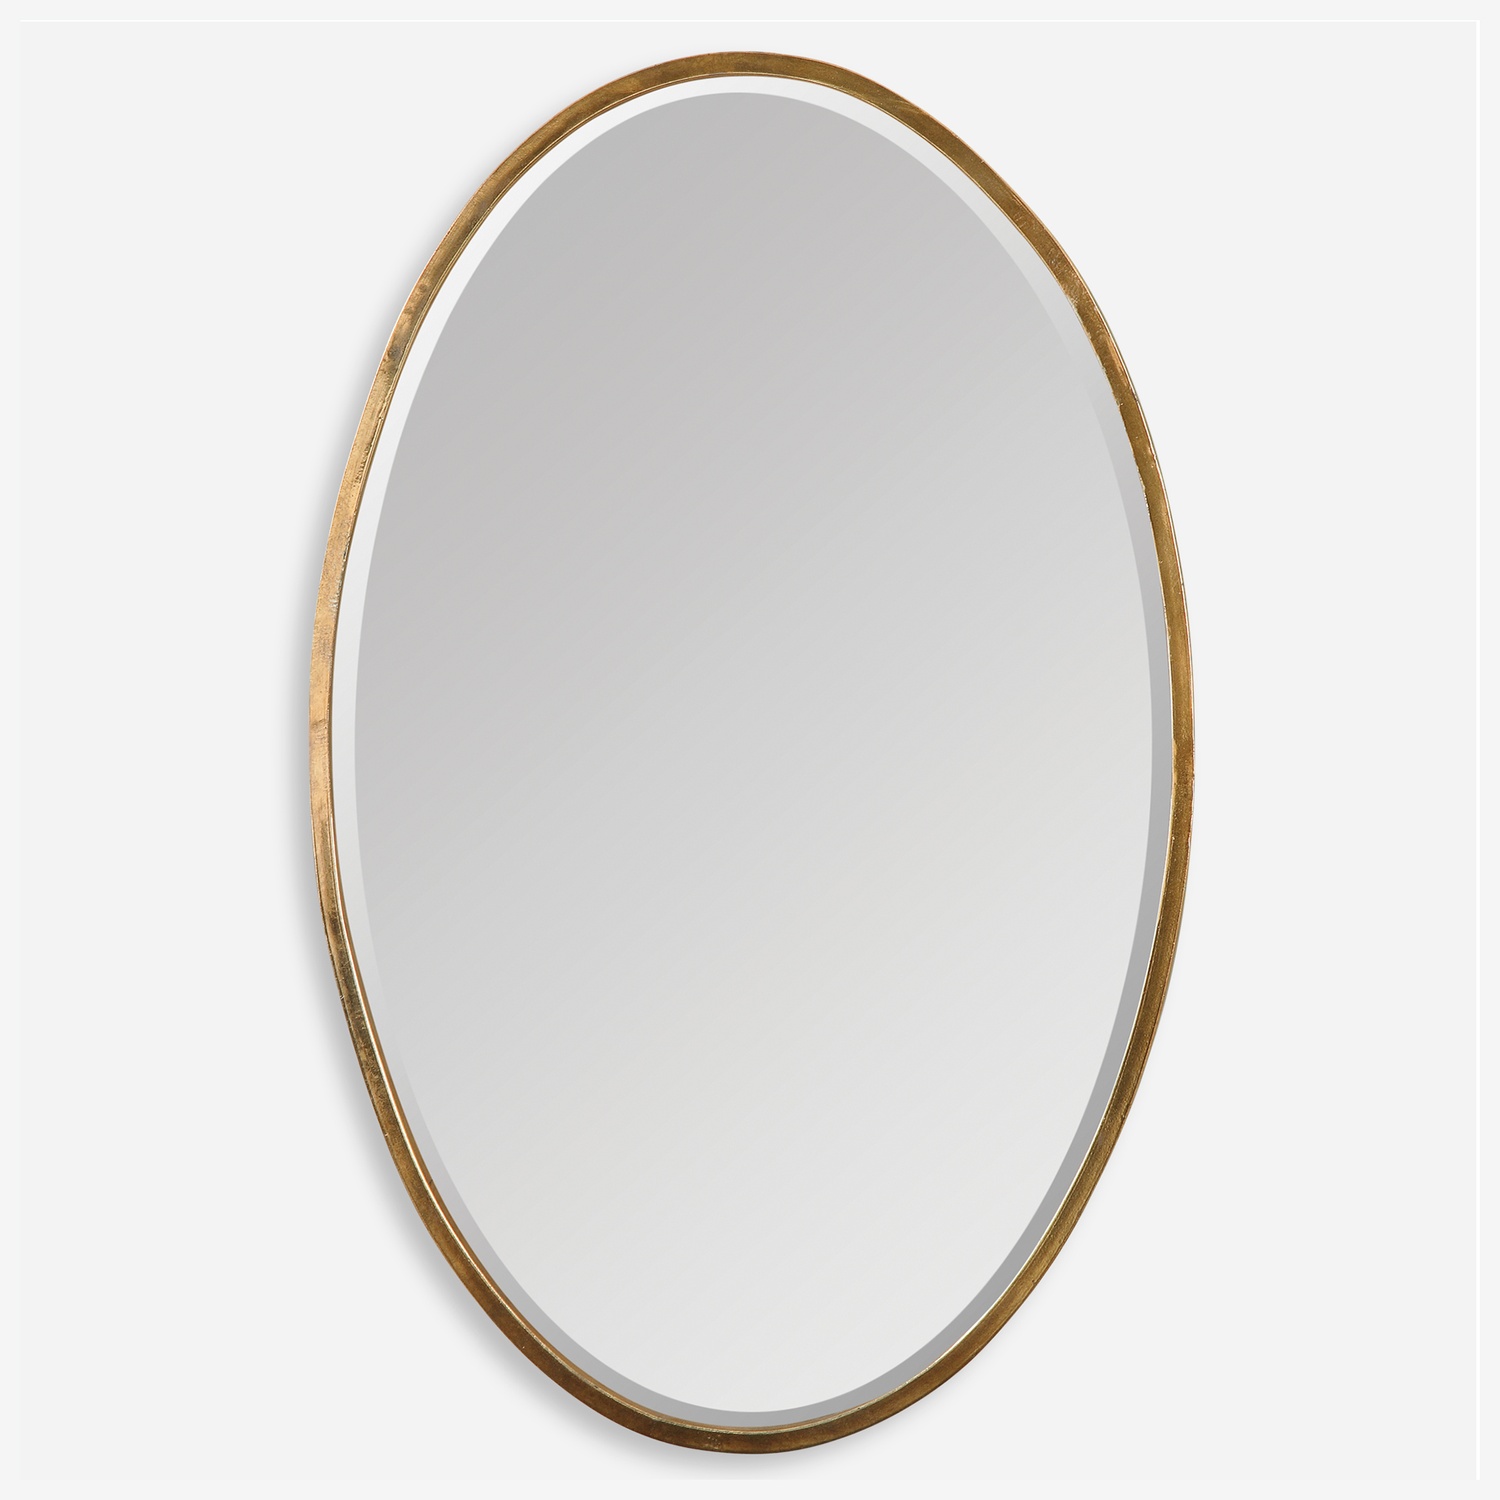 Herleva Oval-Gold Oval Mirrors